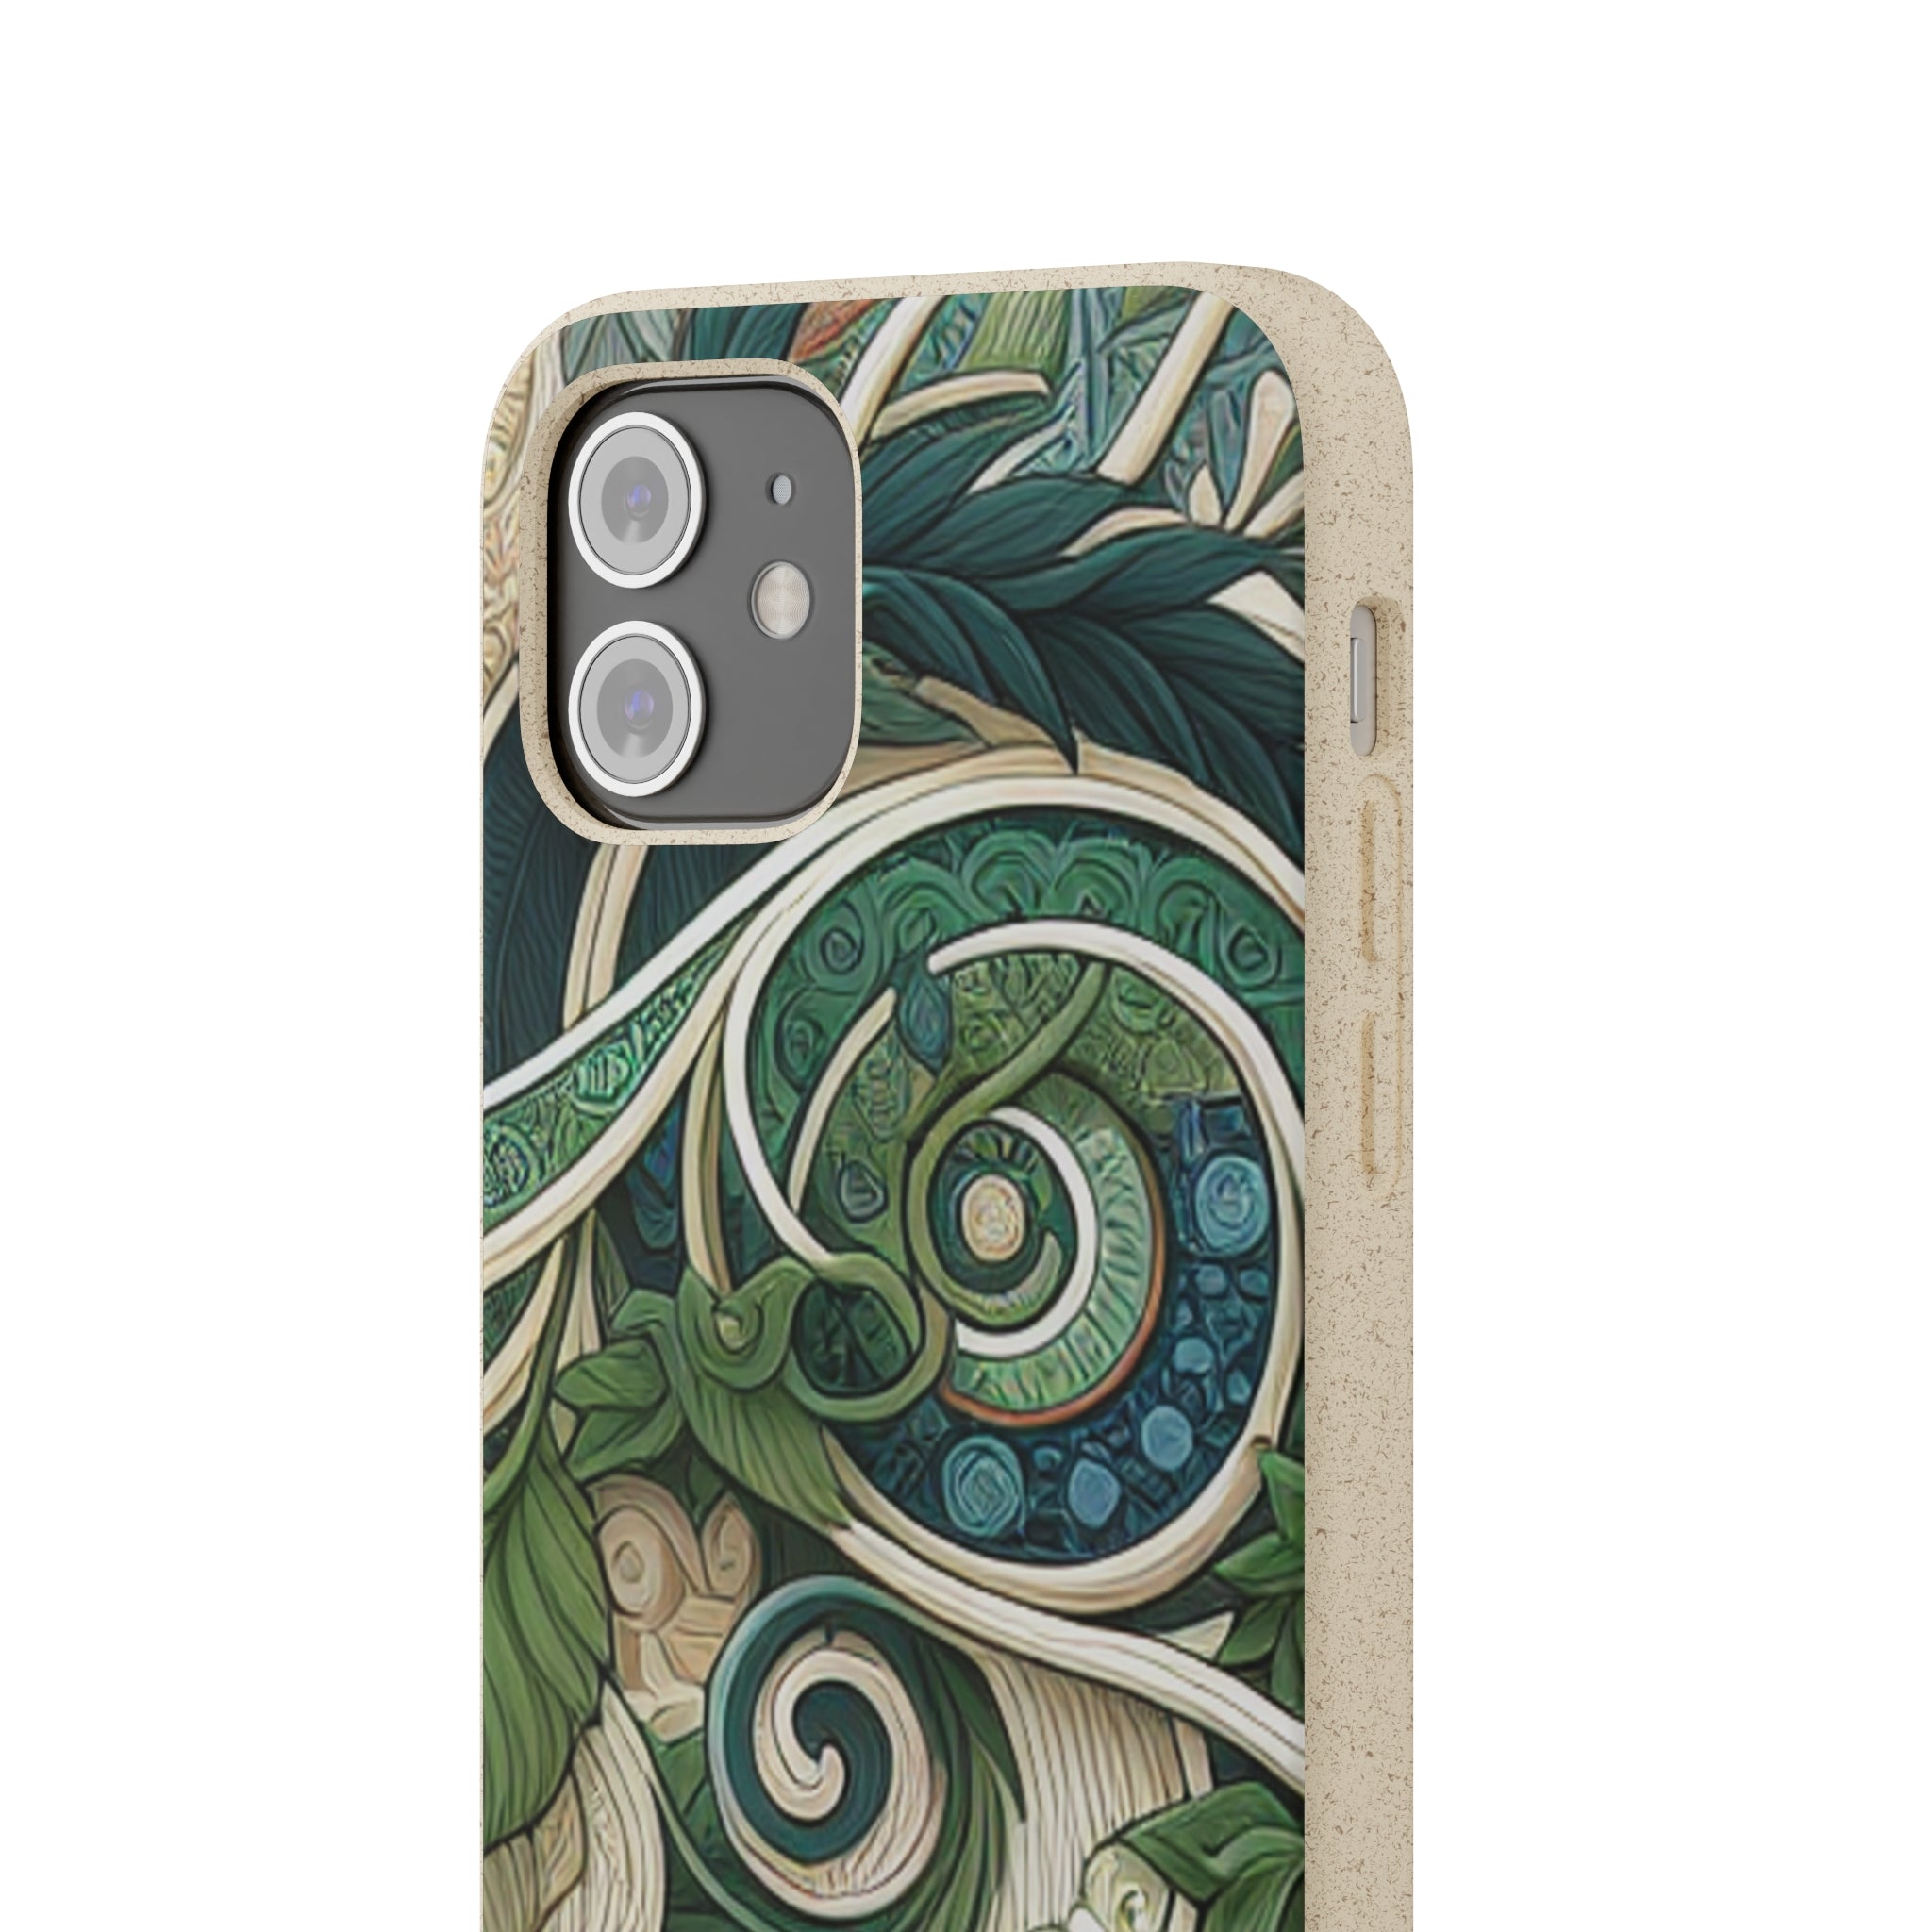 Irene Stone - Biodegradable iPhone Cases